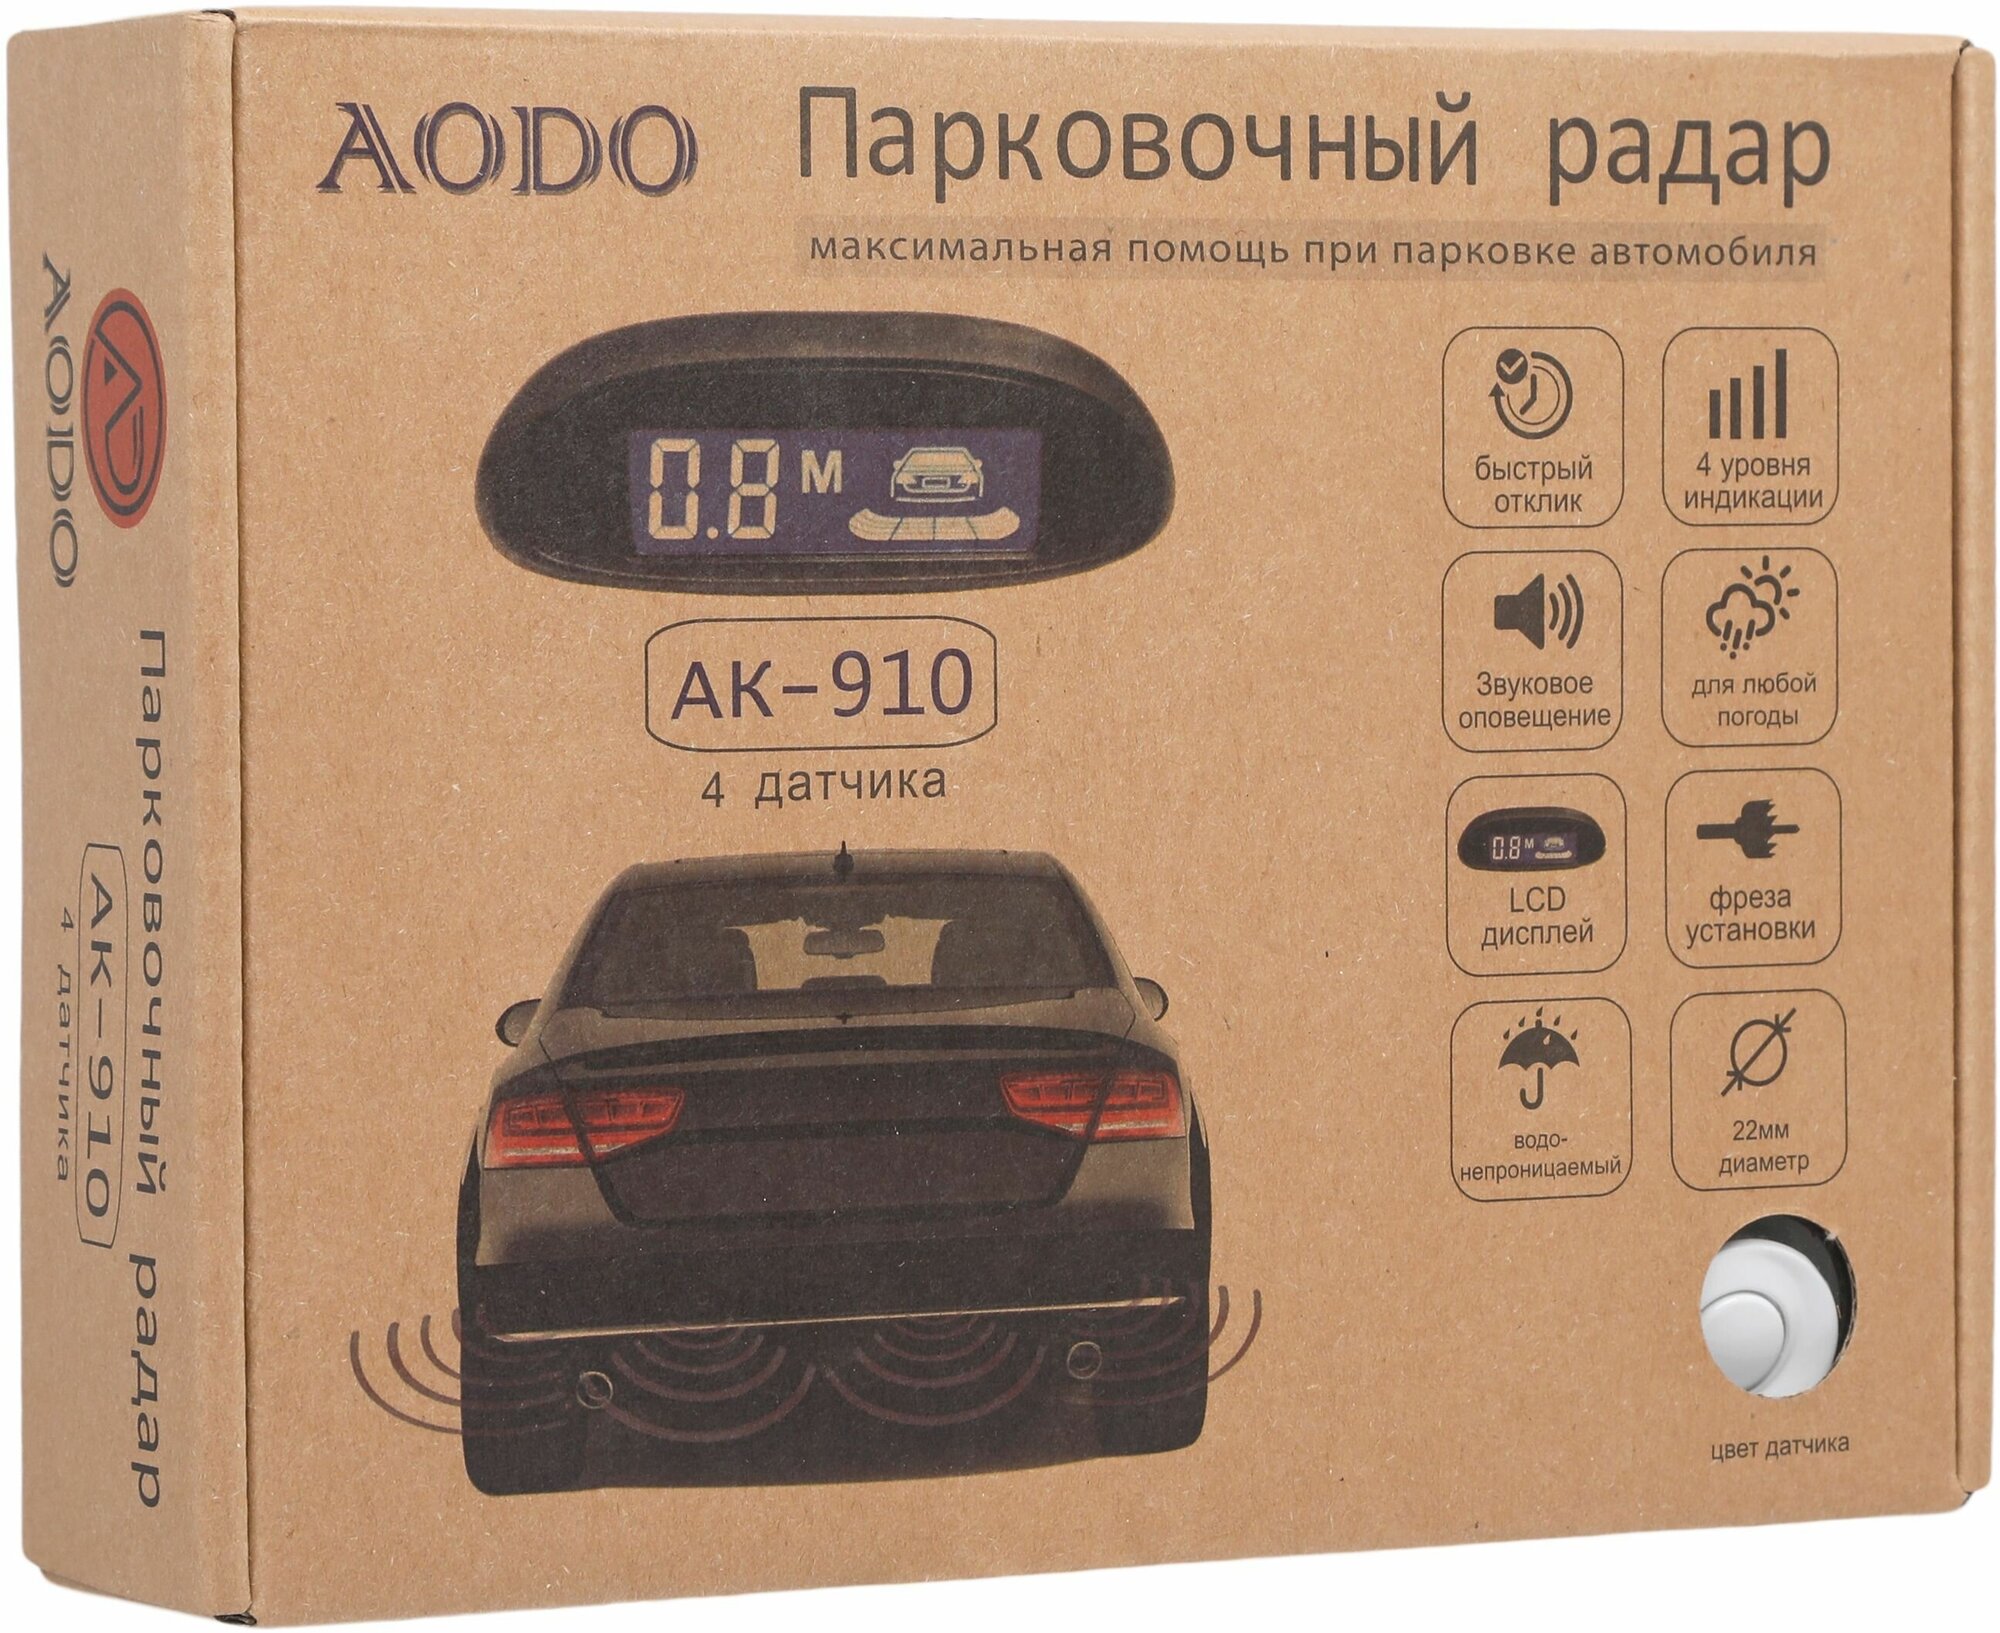 Парктроник Для Авто 4 Датчика / Парковочный Радар AODO Ak-910